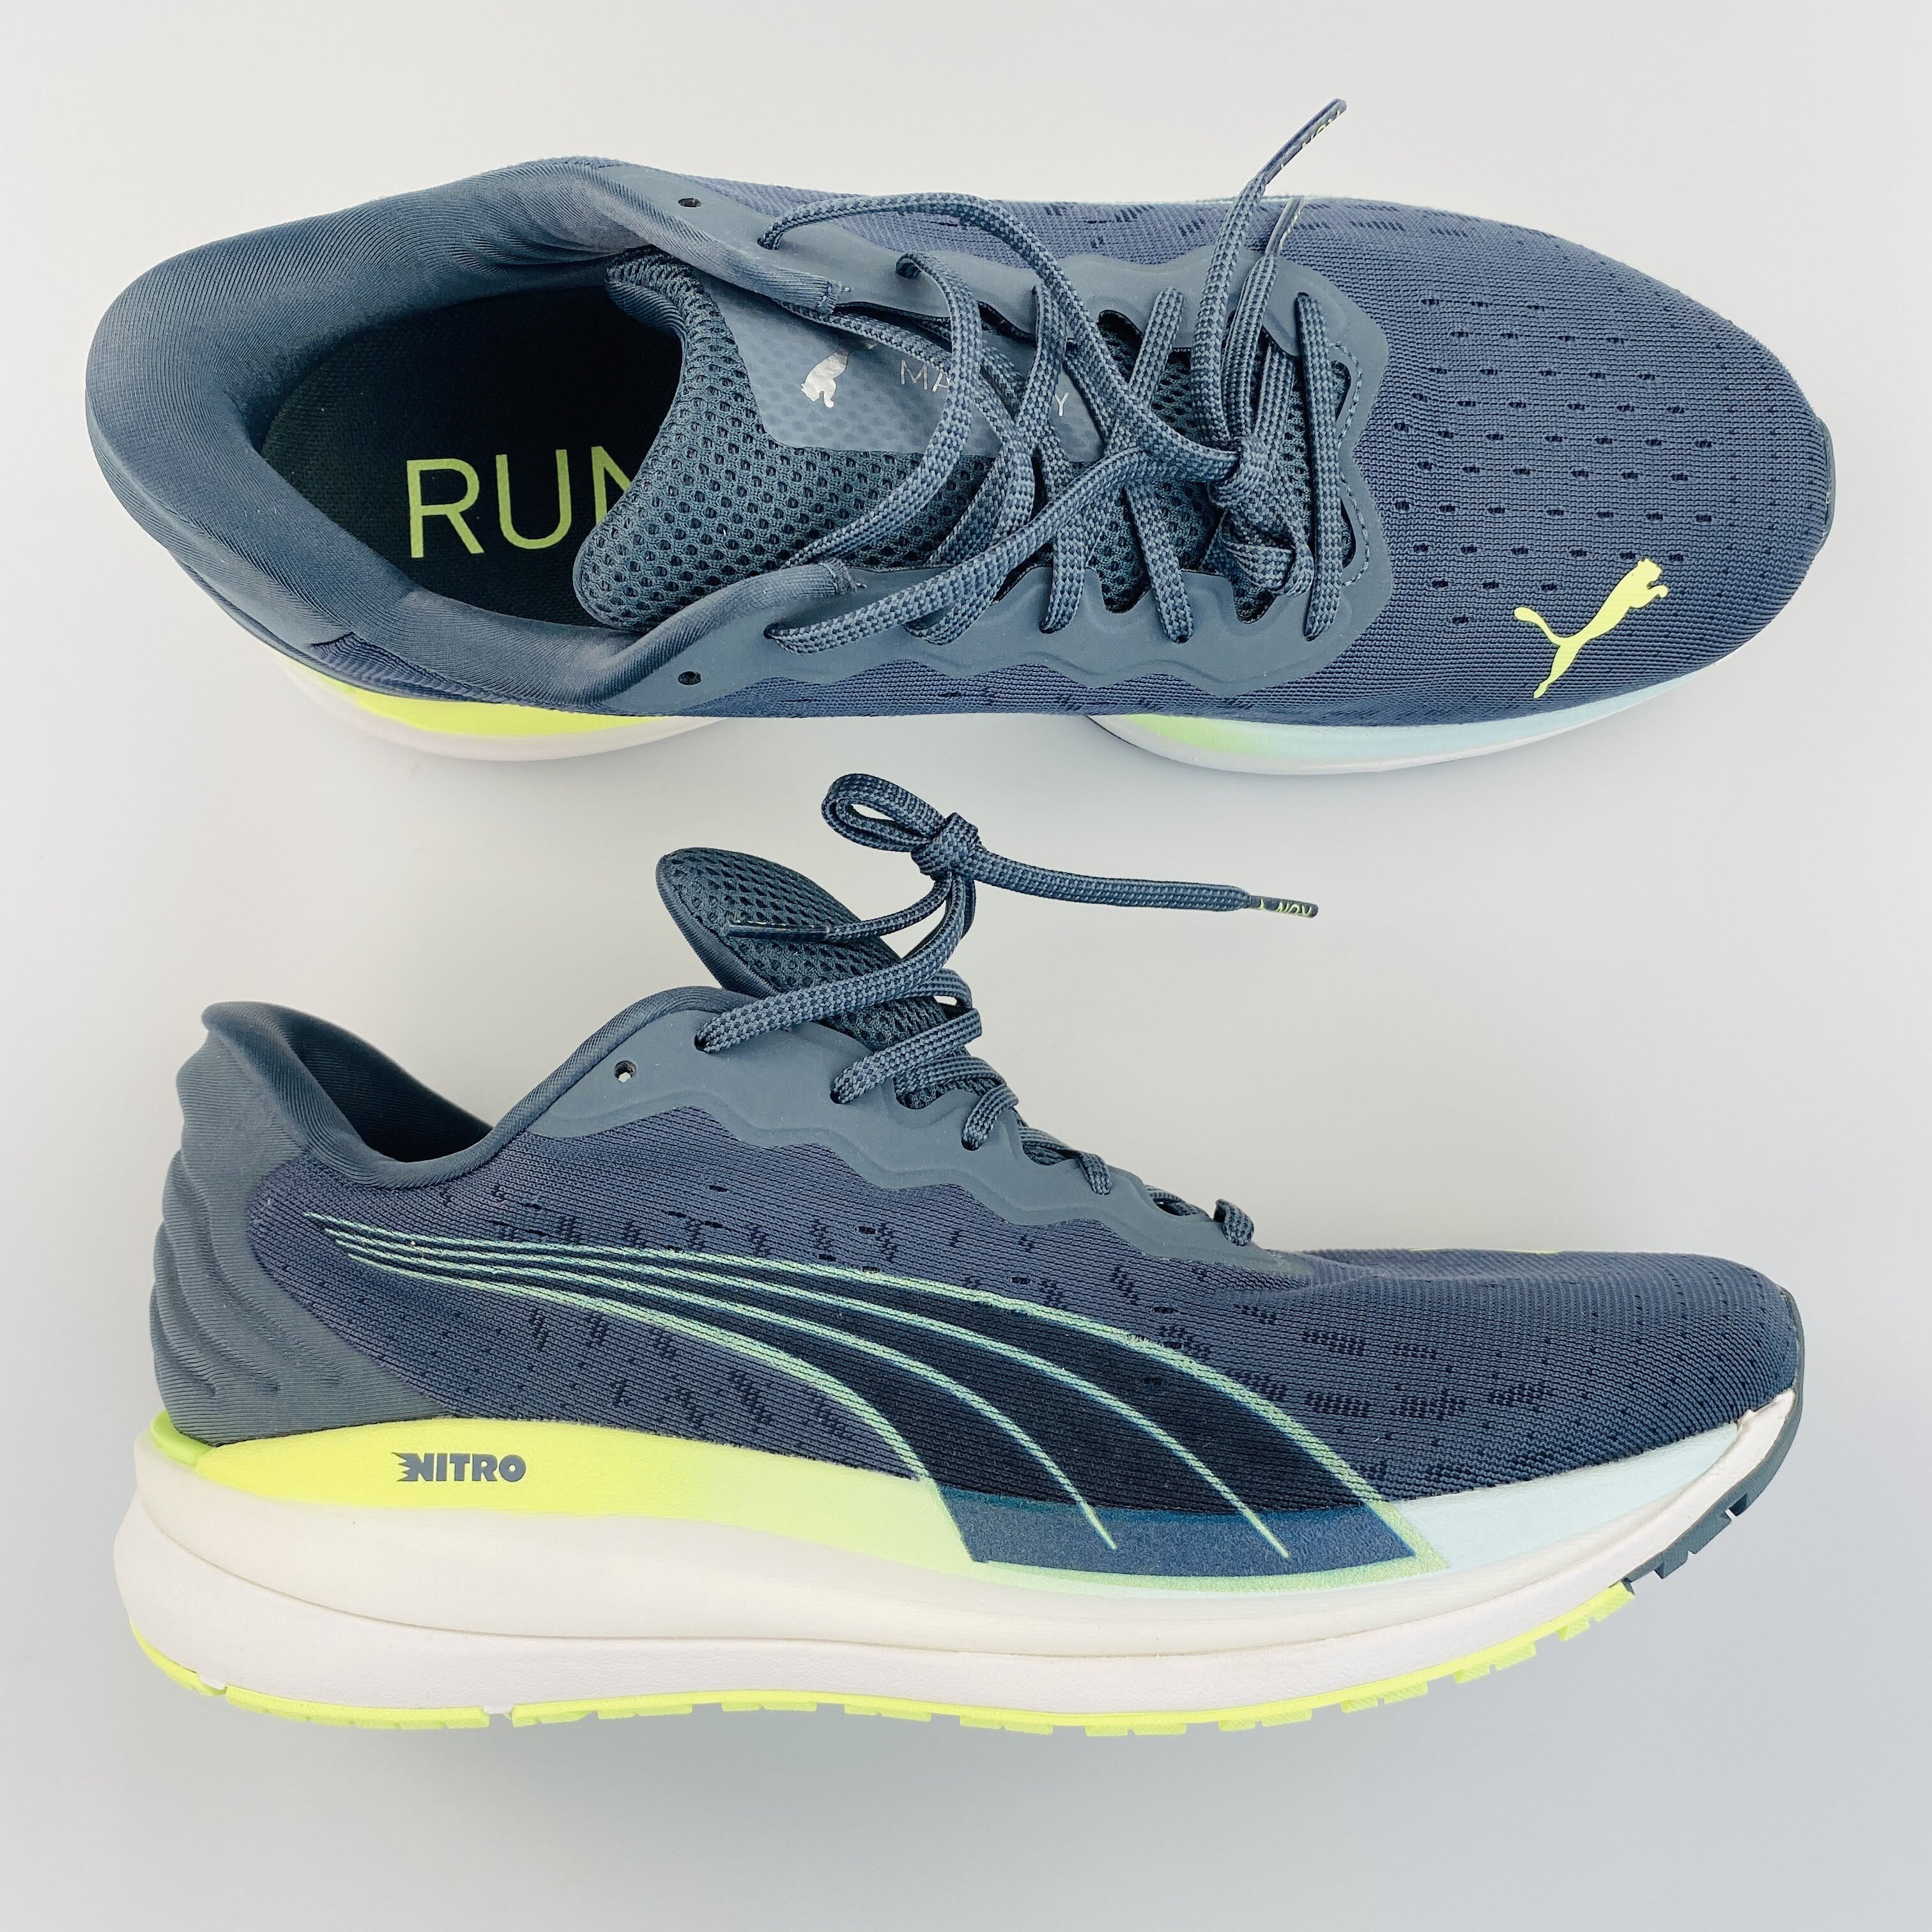 Puma Chaussures de running Magnify NITRO Knit Homme, Violet/Vert/Noir